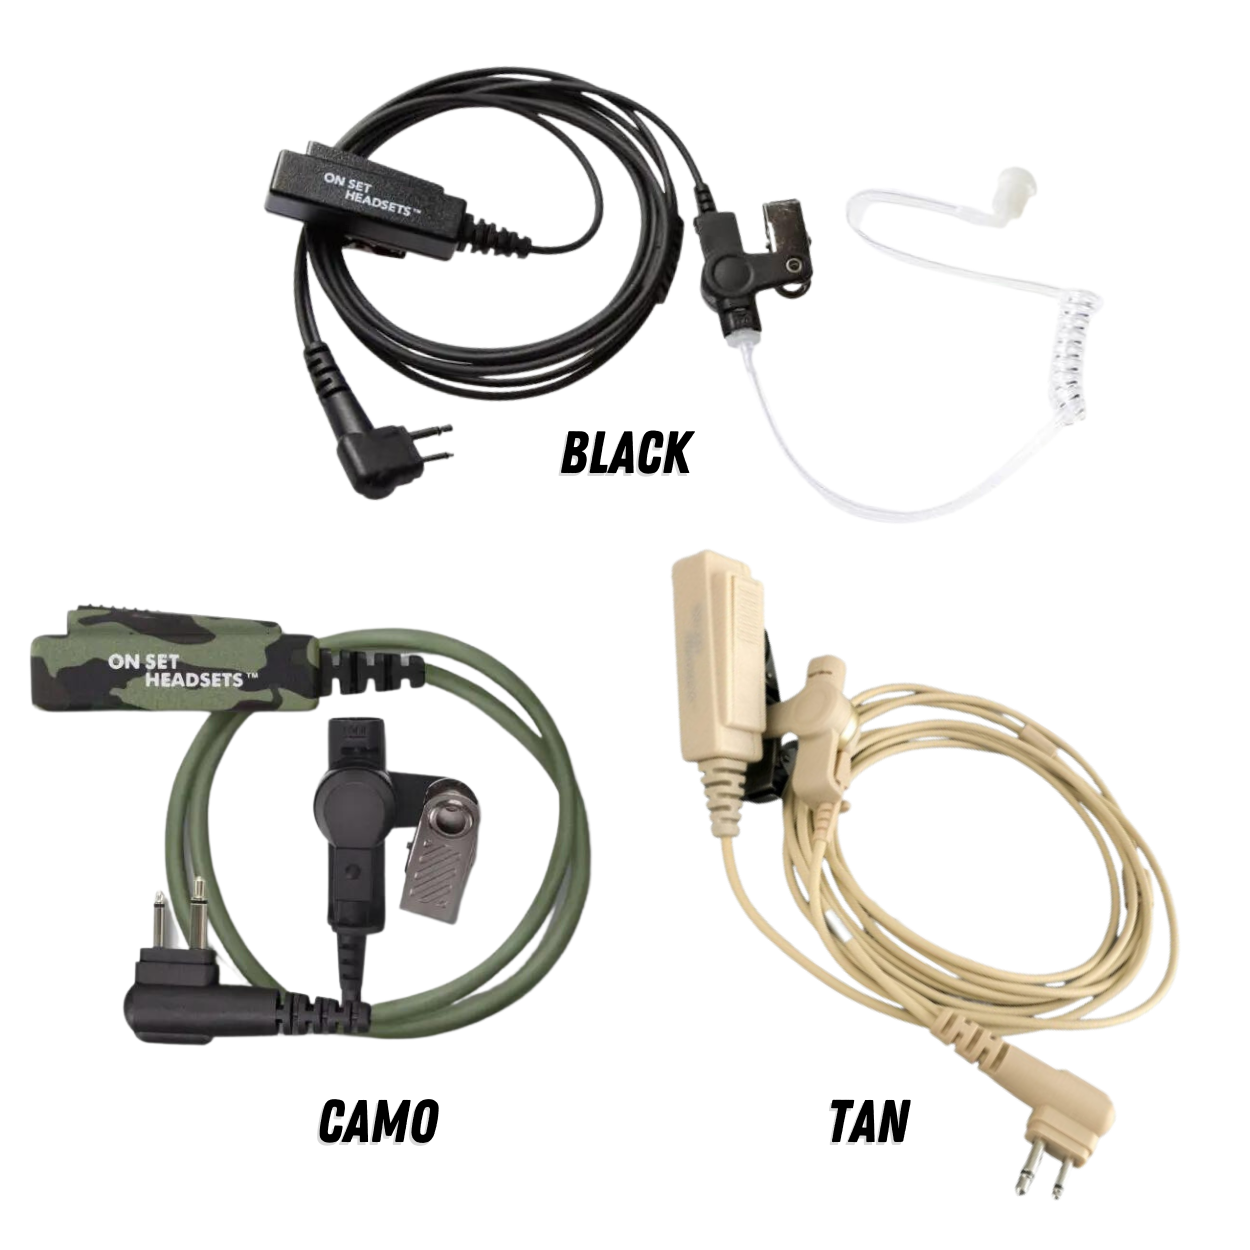 FilmPro Headset - Black, Camo or Tan